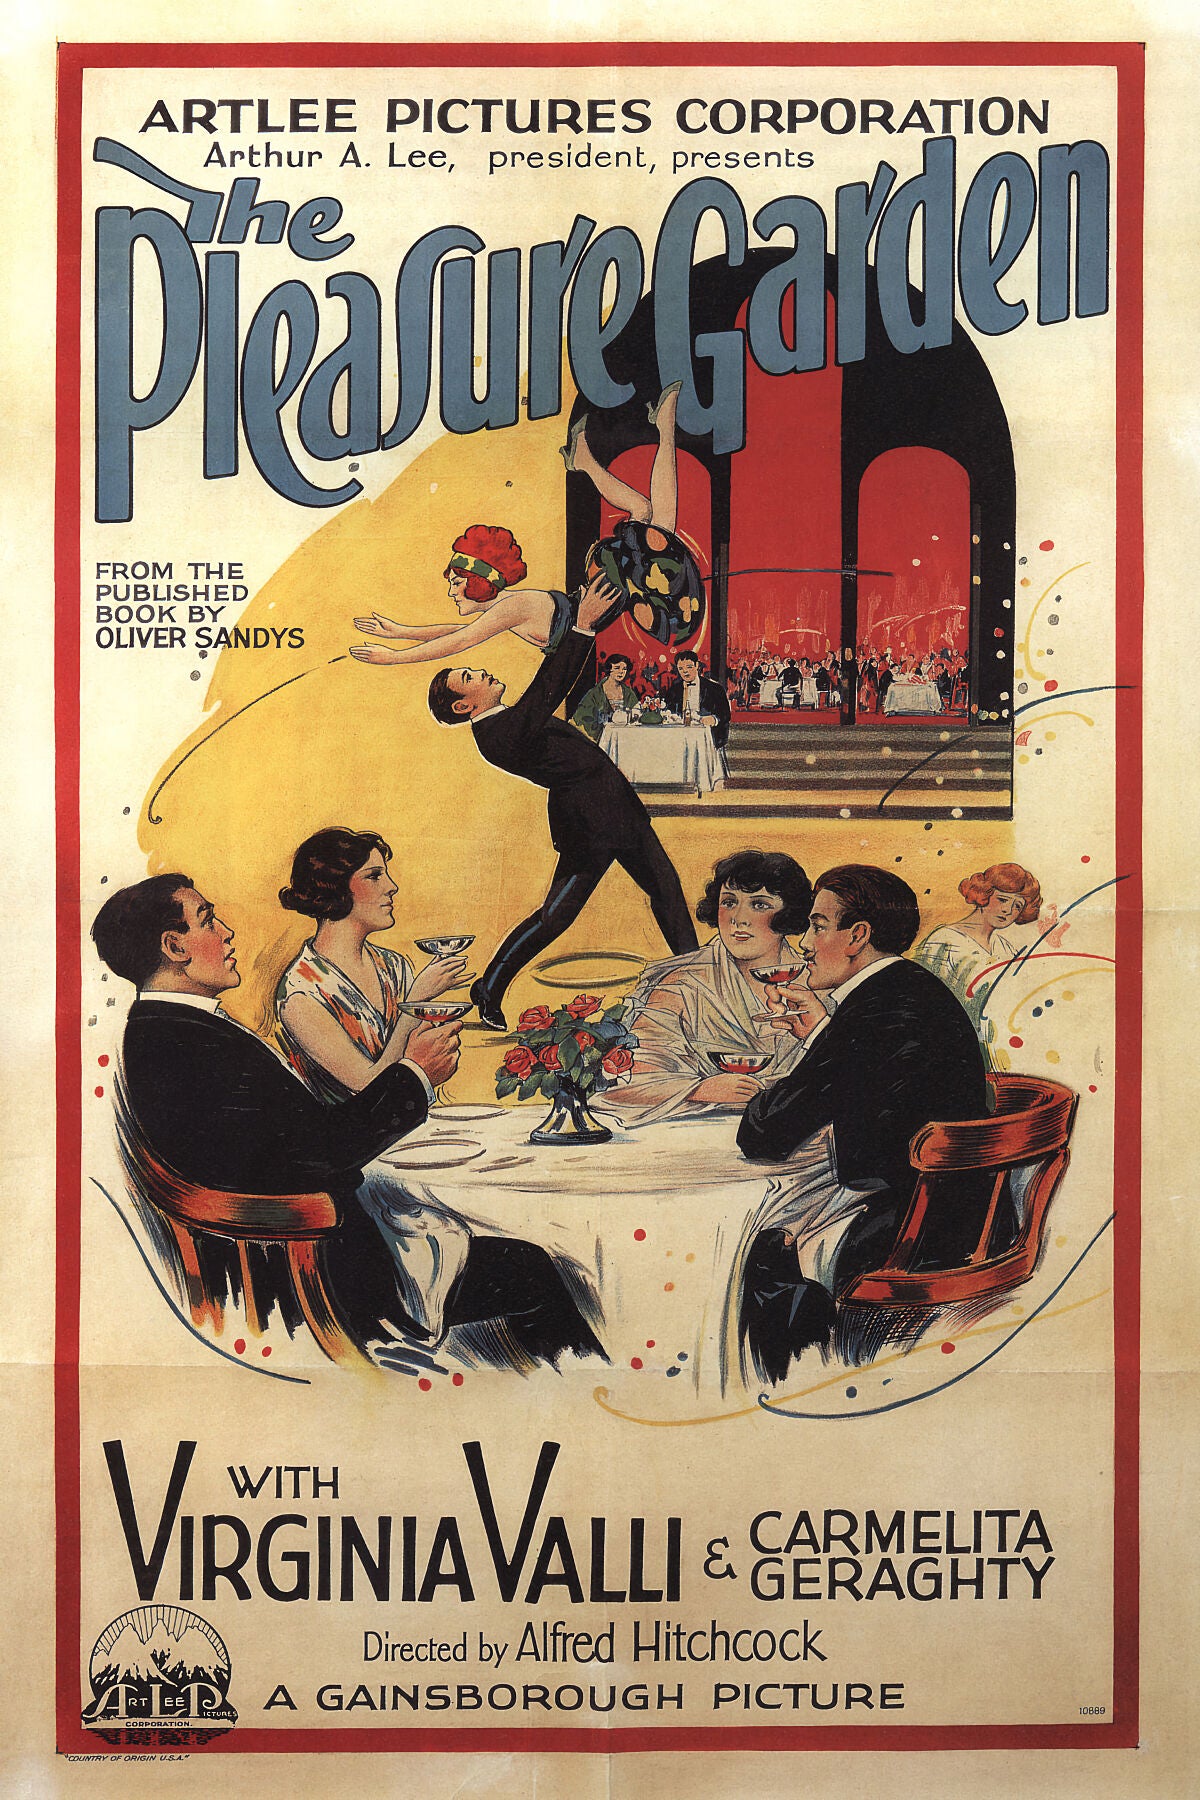 Poster for The Pleasure Garden, 1925.